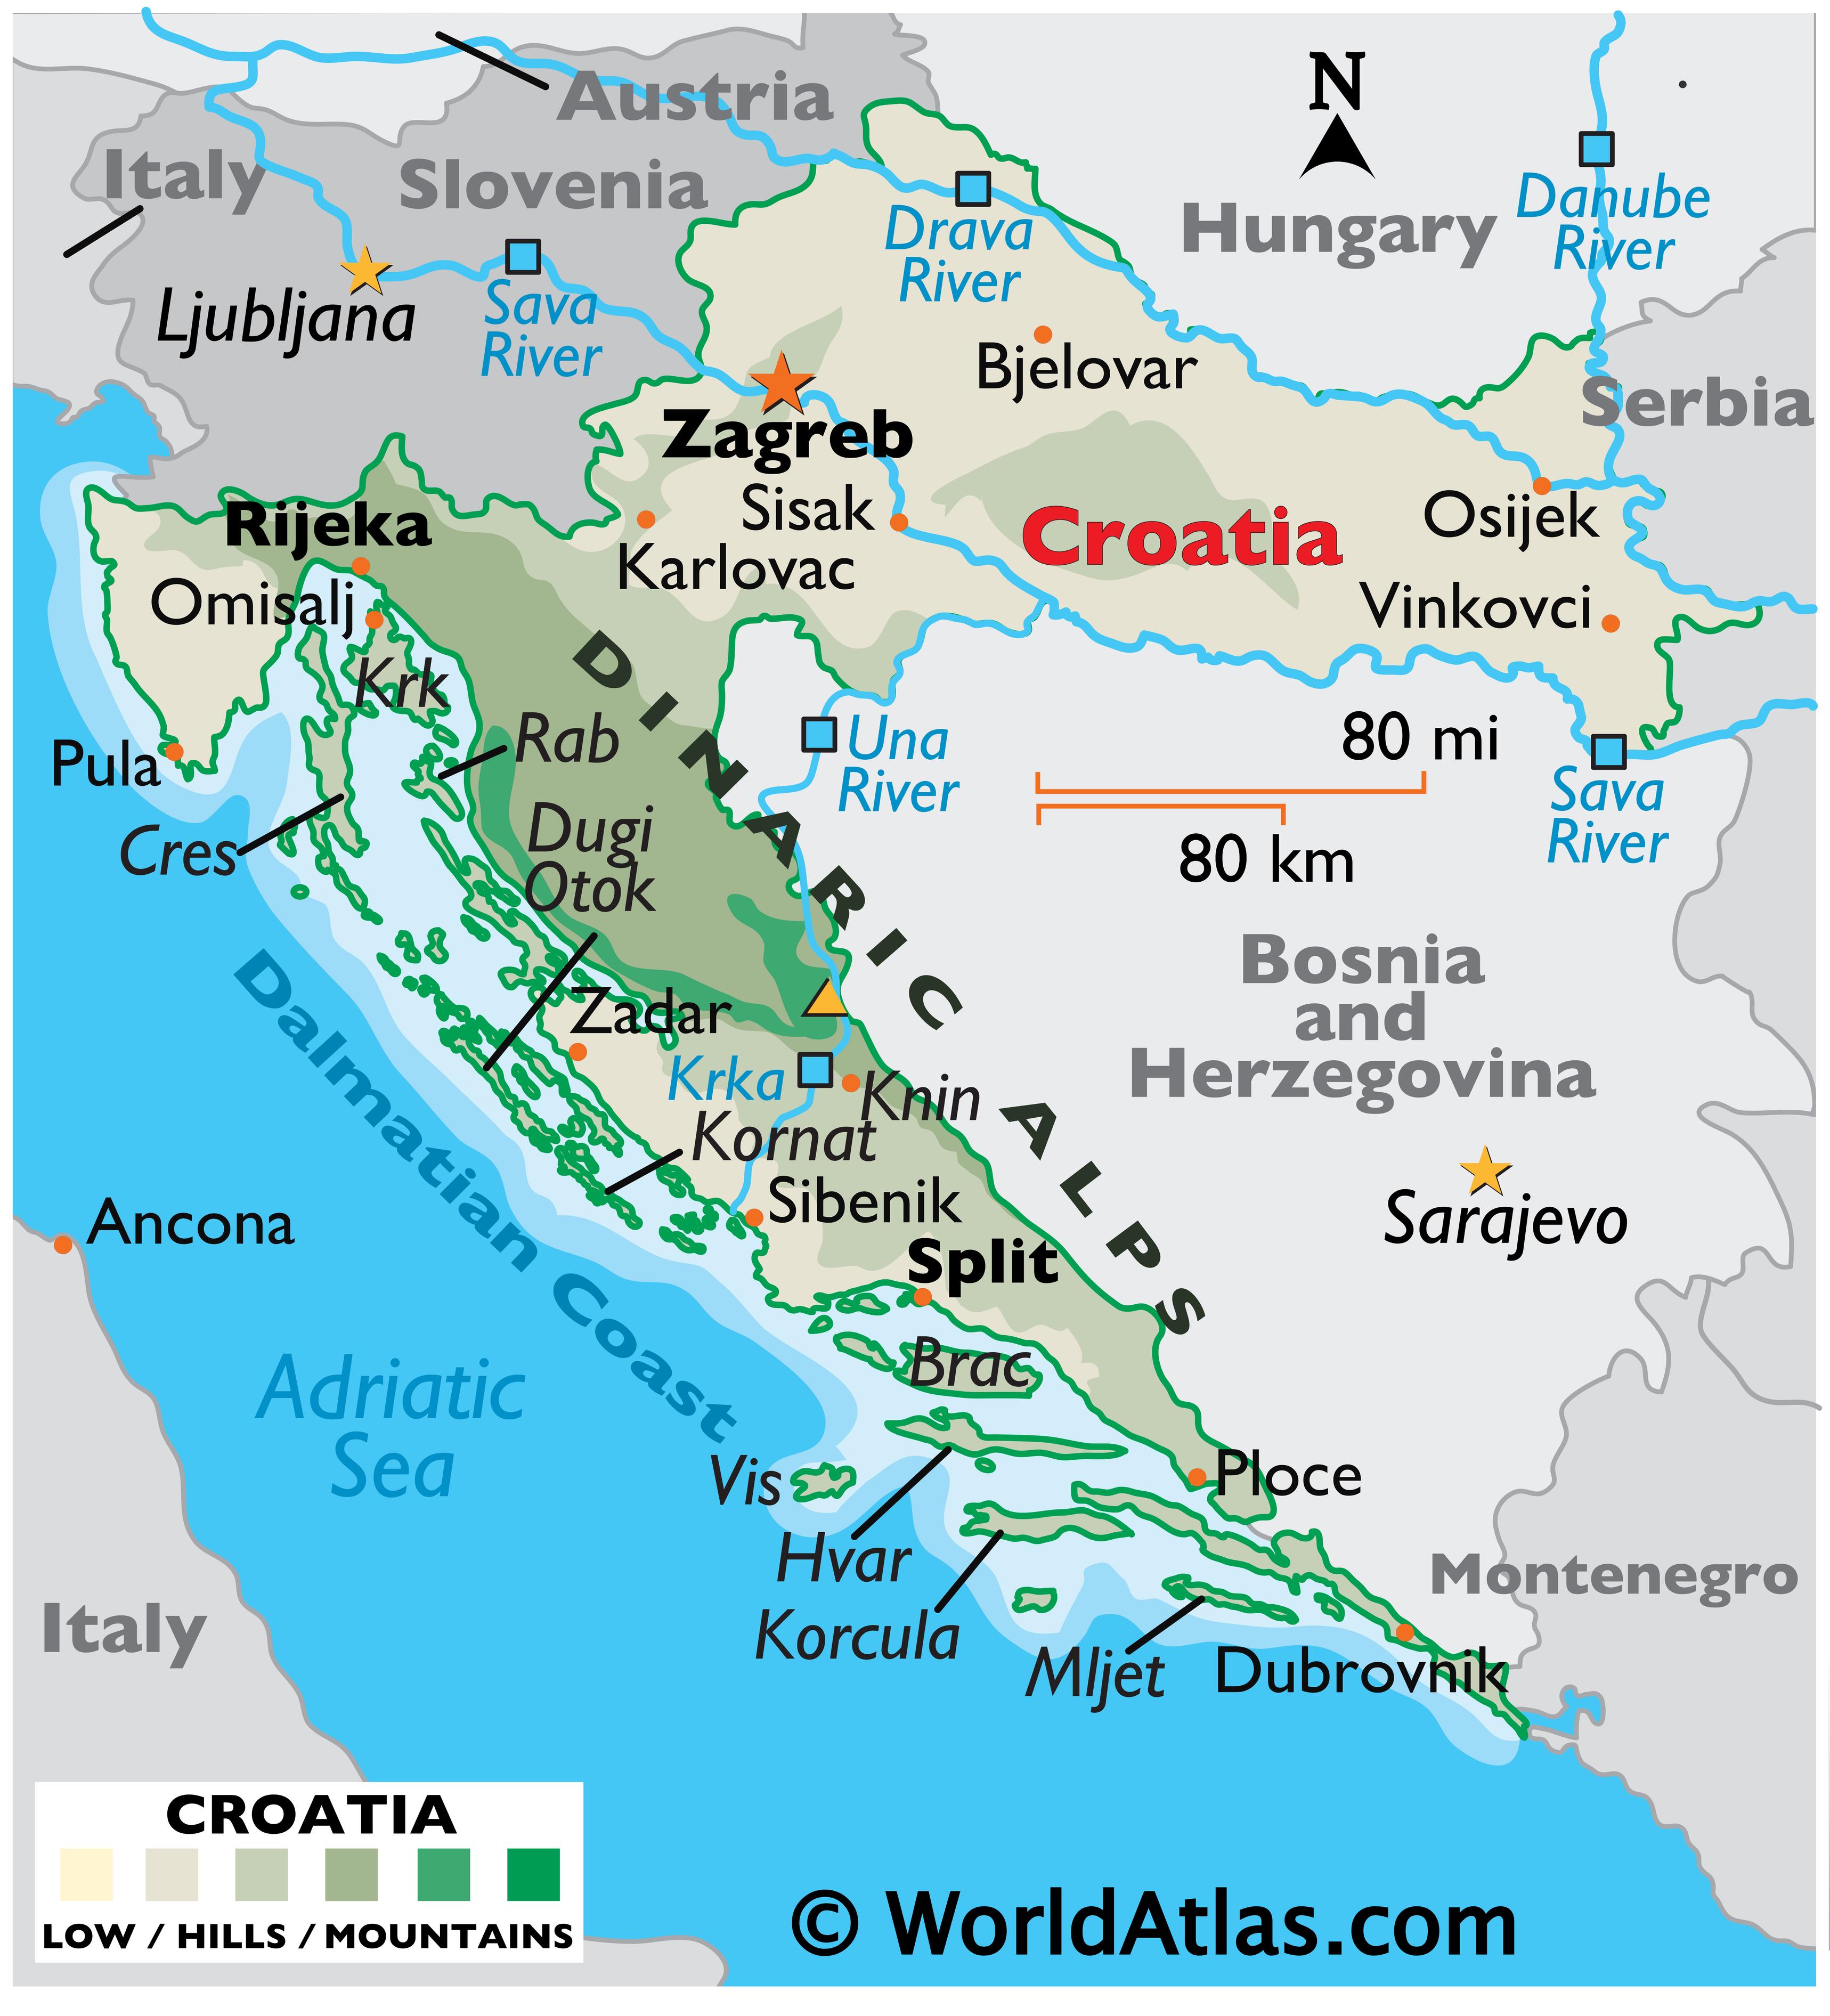 Croatia Map / Geography of Croatia / Map of Croatia - Worldatlas.com